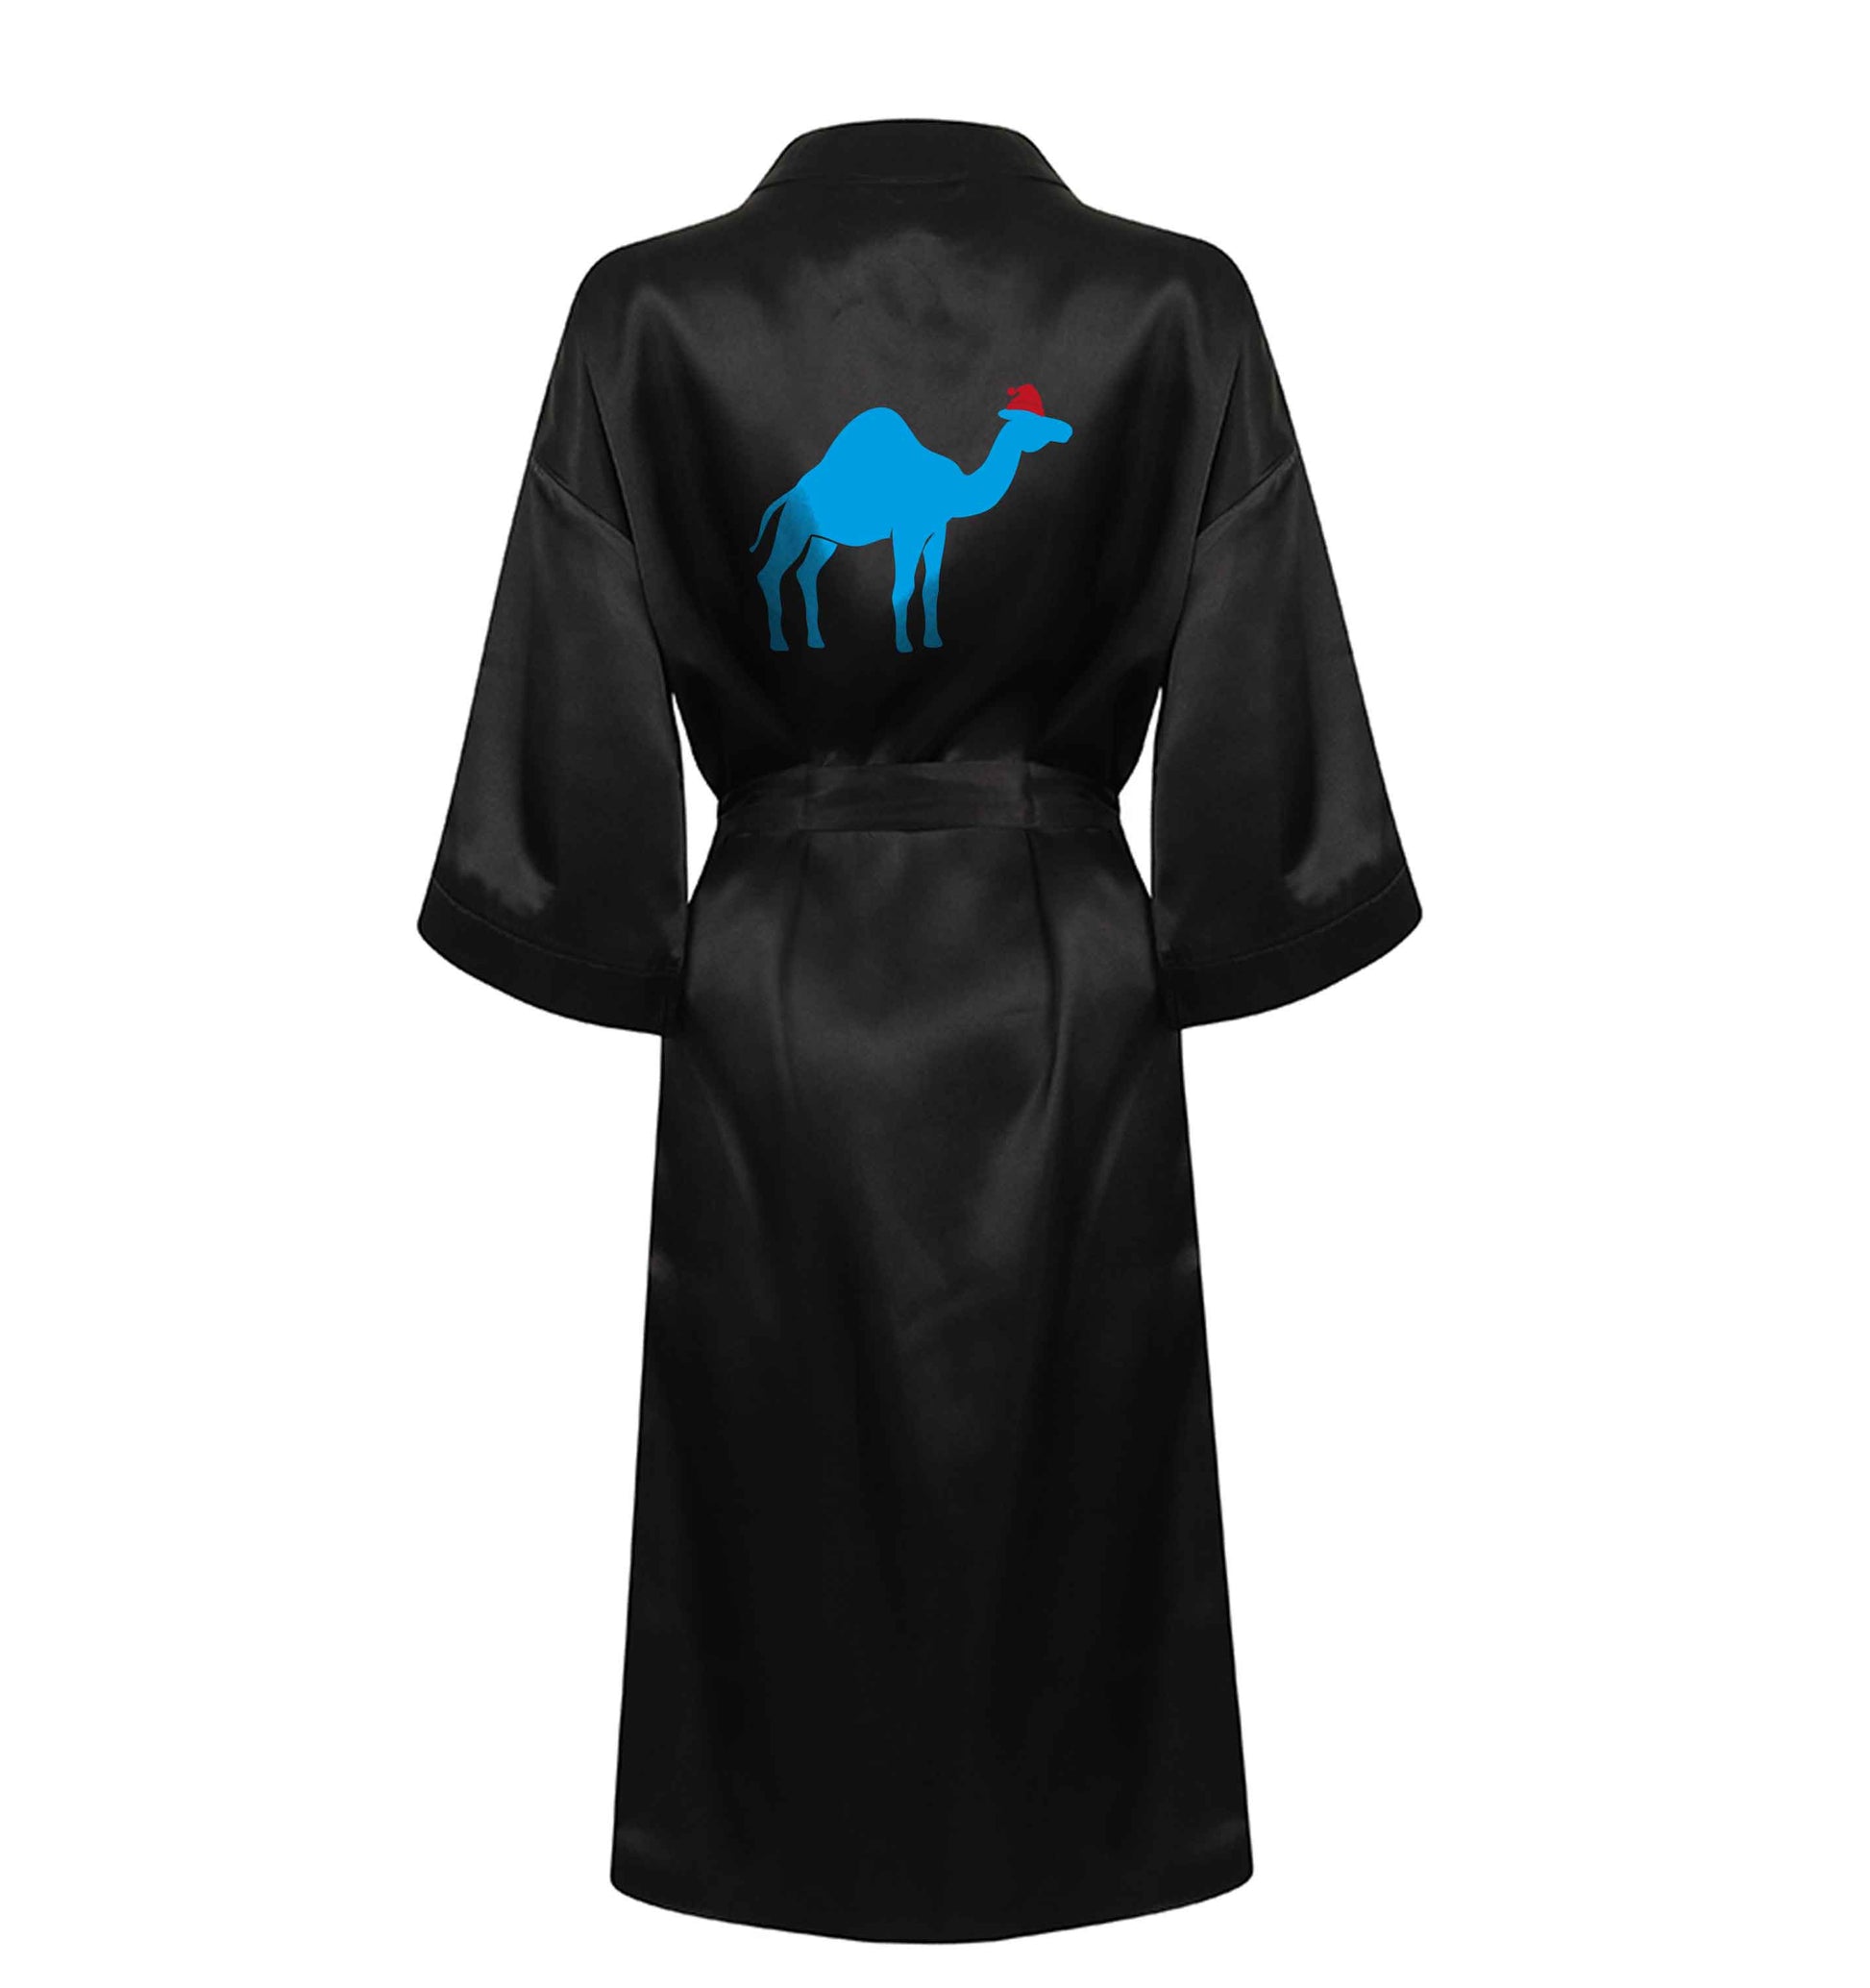 Blue camel santa XL/XXL black ladies dressing gown size 16/18